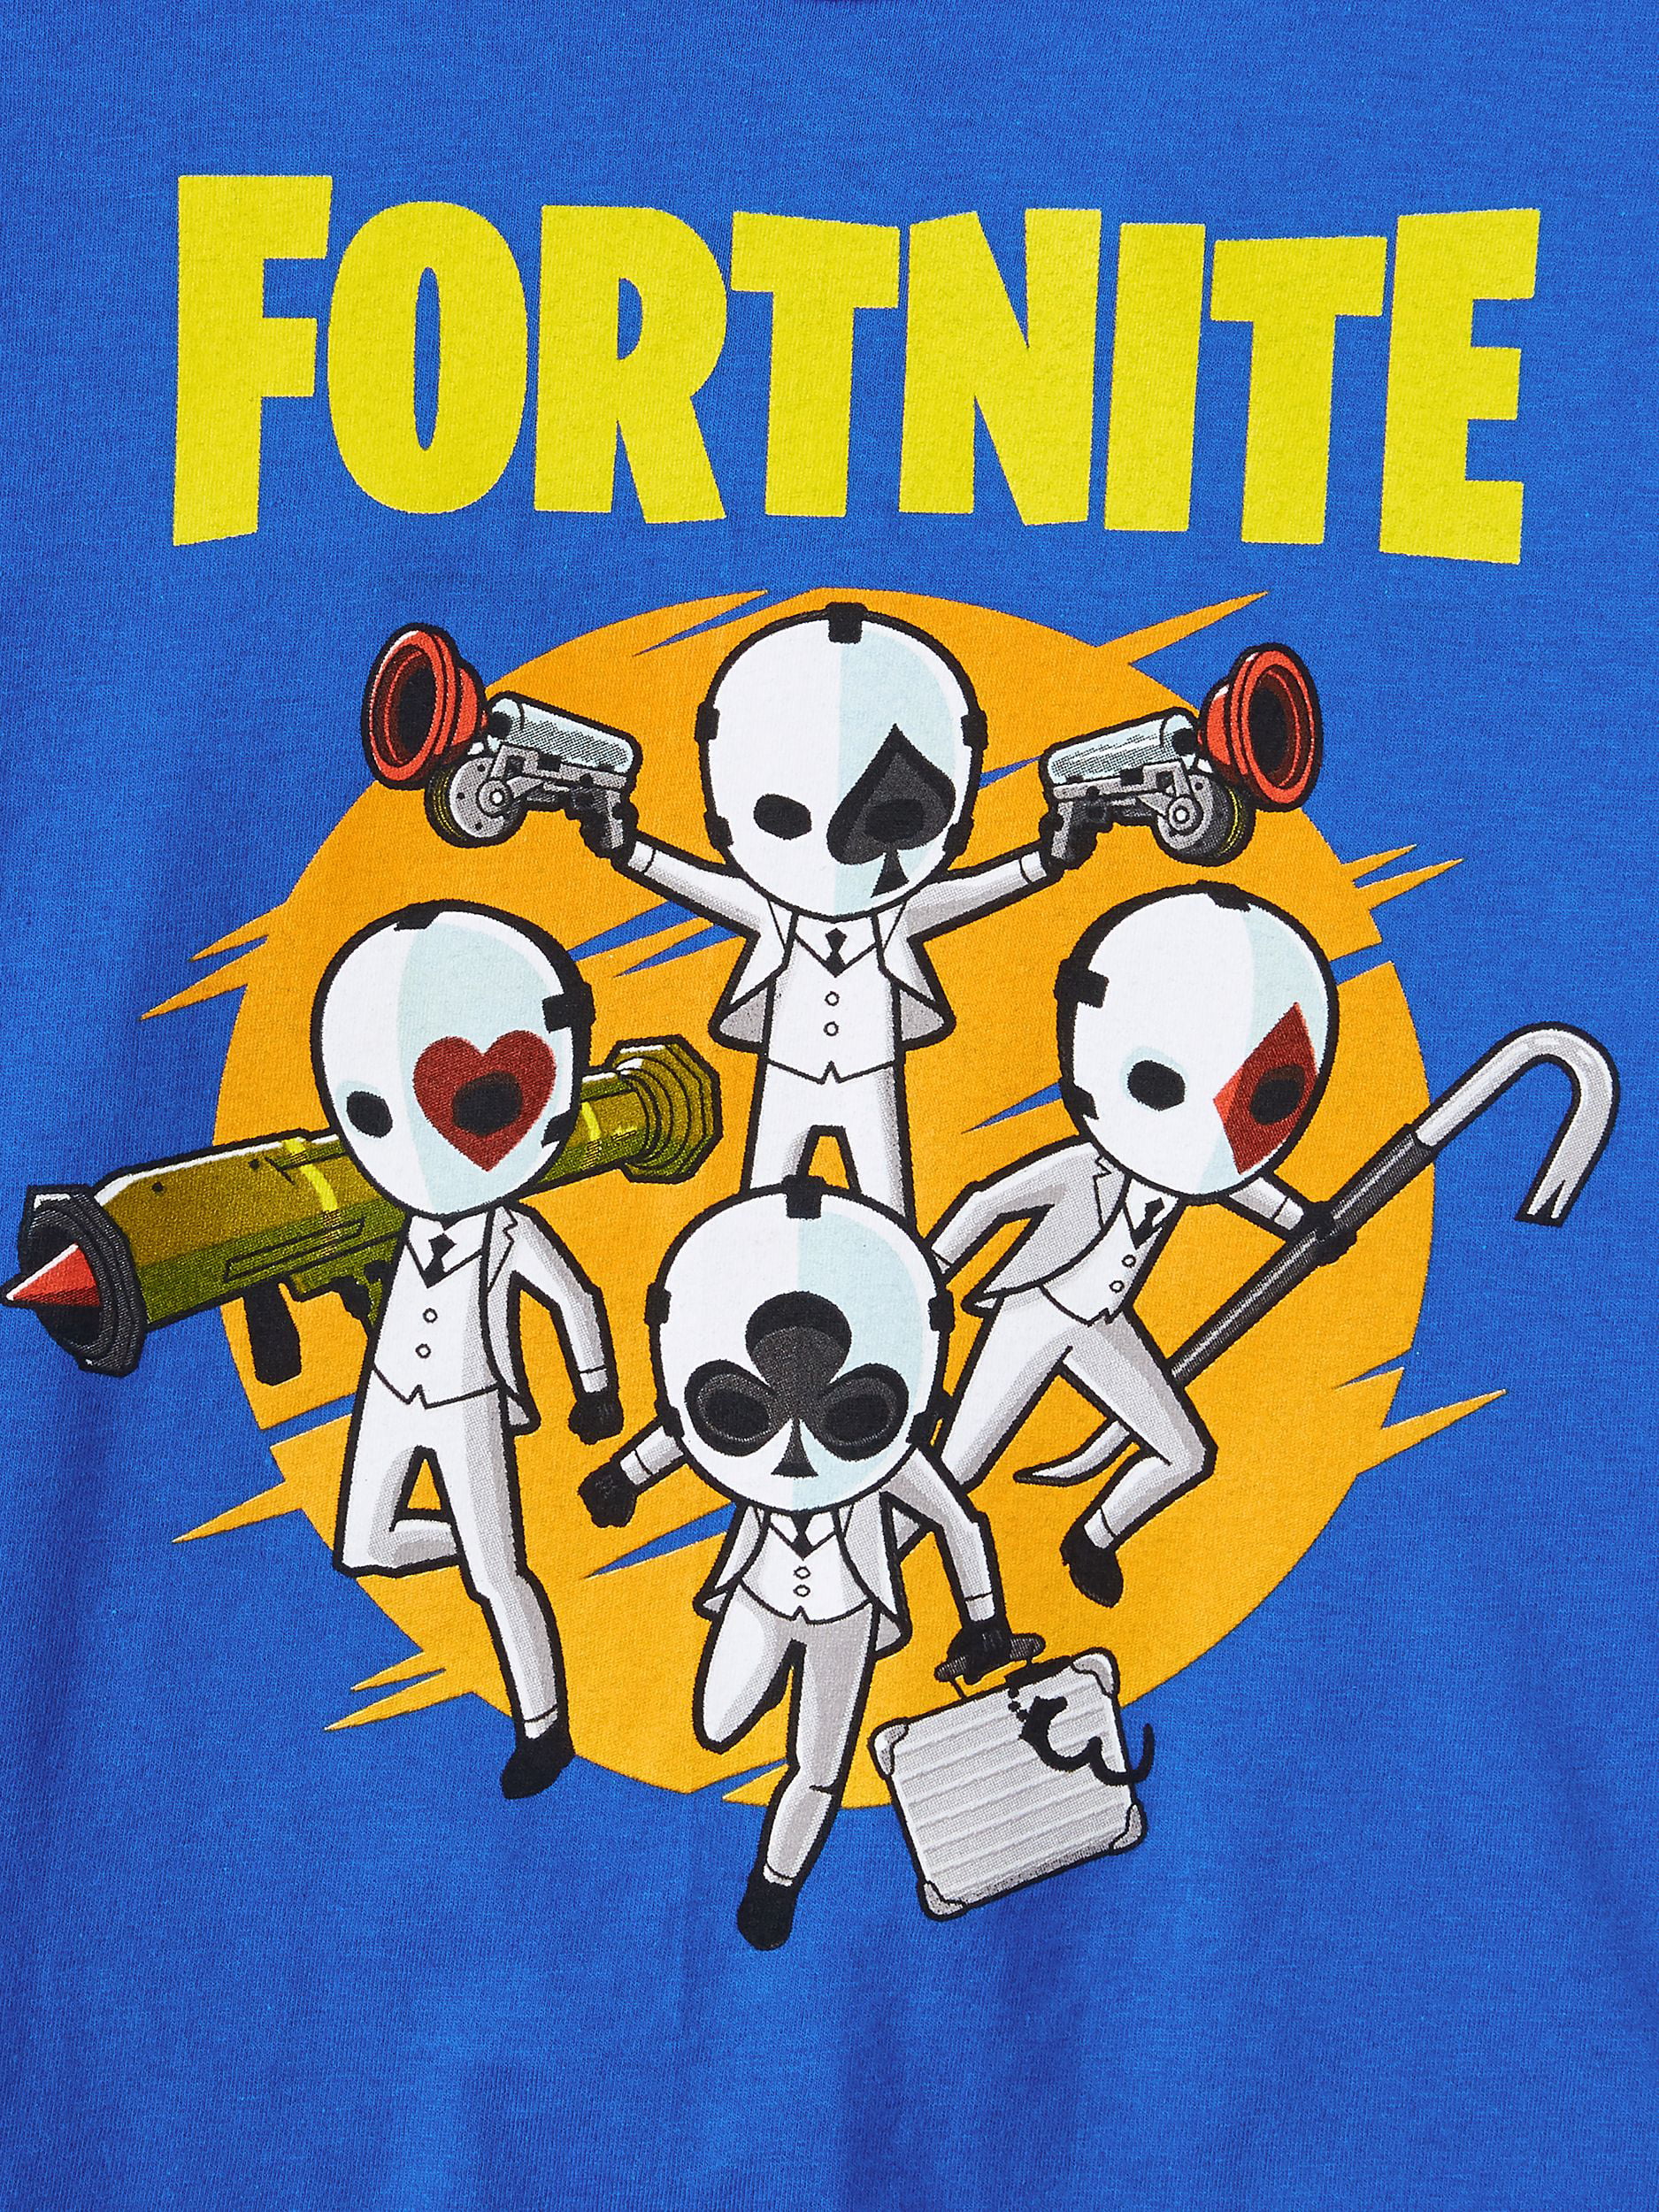 Fortnite Boys Battle Royale Wild Cards Graphic Design T-Shirt, X